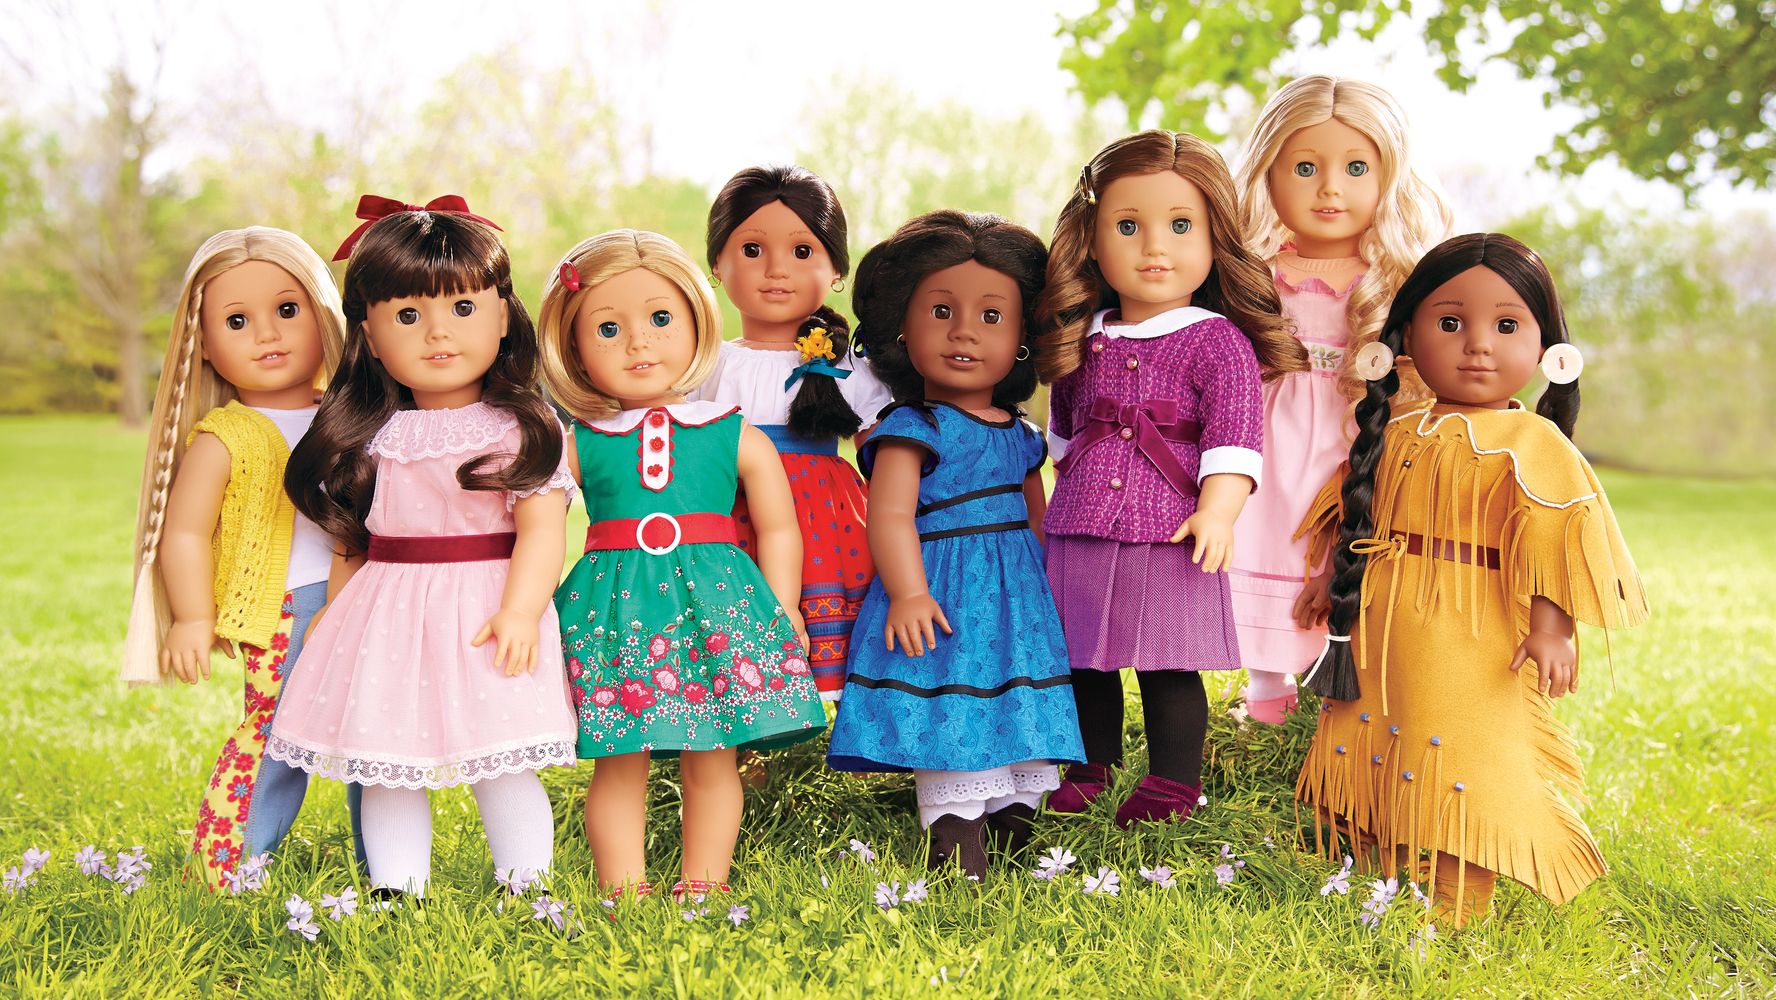 American Girl Doll Shines In An Age Of Reclaimed Girlhood